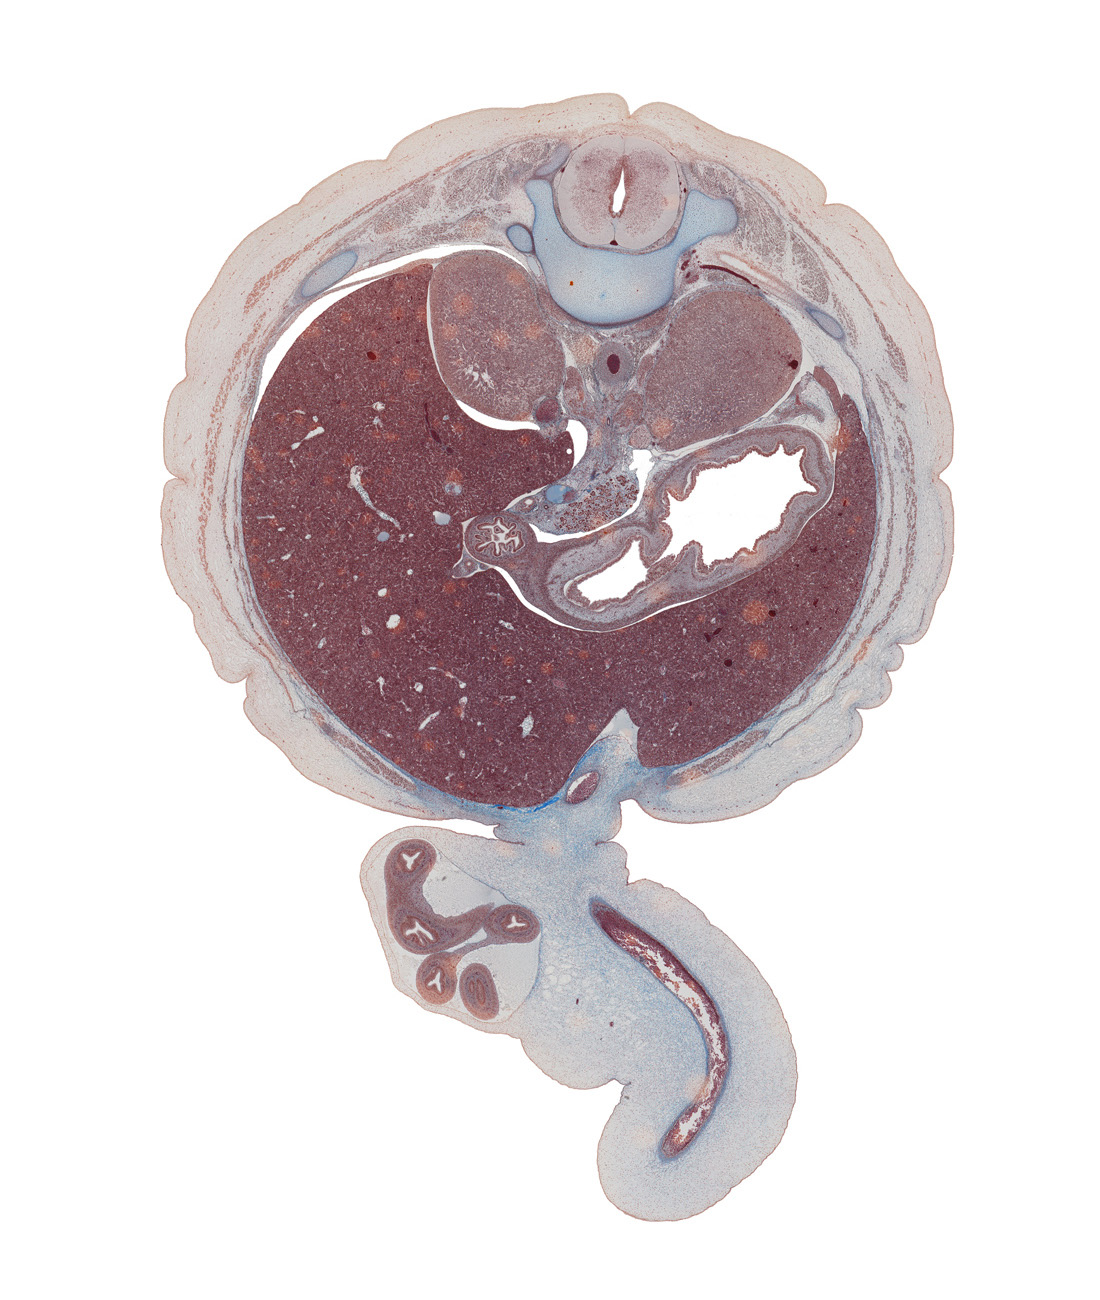 T-11 / T-12 interganglion region, aorta, caudate lobe of liver, centrum of T-12 vertebra, cystic duct, descending part of duodenum, dorsal mesogastrium, falciform ligament, gastric fold(s), head of ventral pancreas, hepatic portal vein, herniated intestines, inferior vena cava, left lobe of liver, neural arch, notochord, pyloric antrum of stomach, rib 12, right lobe of liver, spleen, suprarenal gland cortex, suprarenal impression of liver, umbilical coelom, umbilical cord, umbilical vein